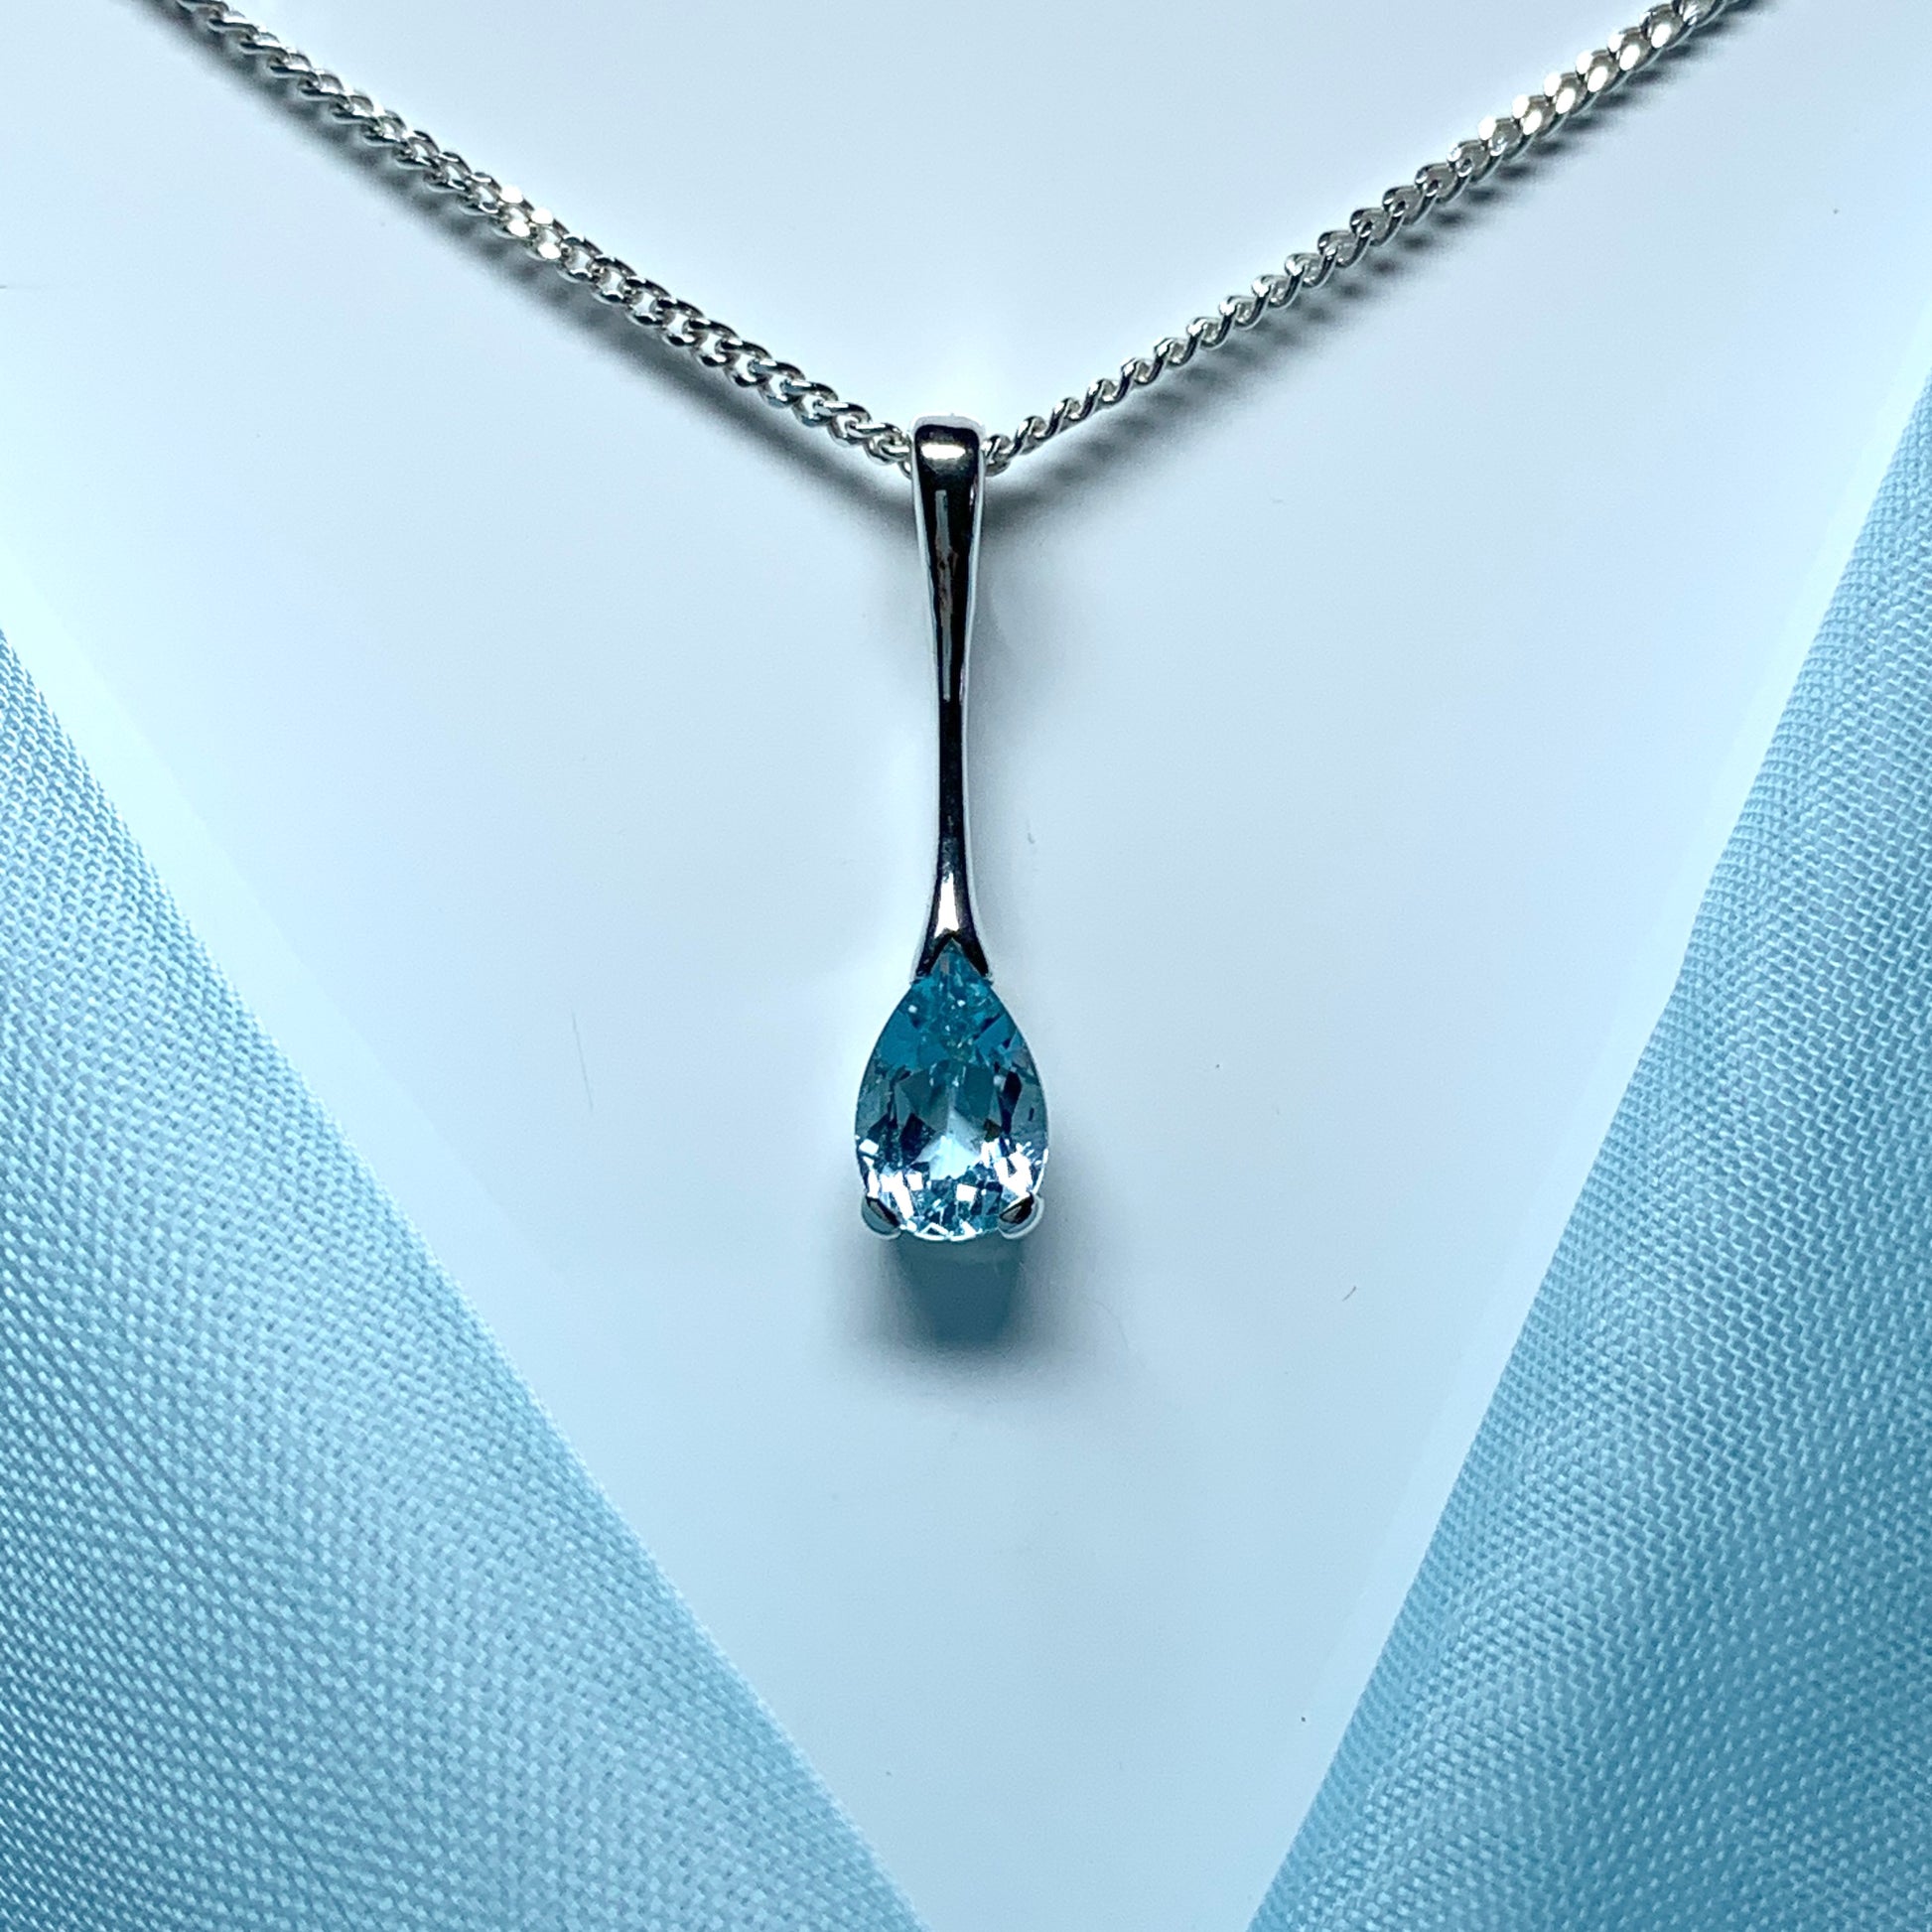 Blue Topaz necklace sterling silver long drop pear shaped pendant